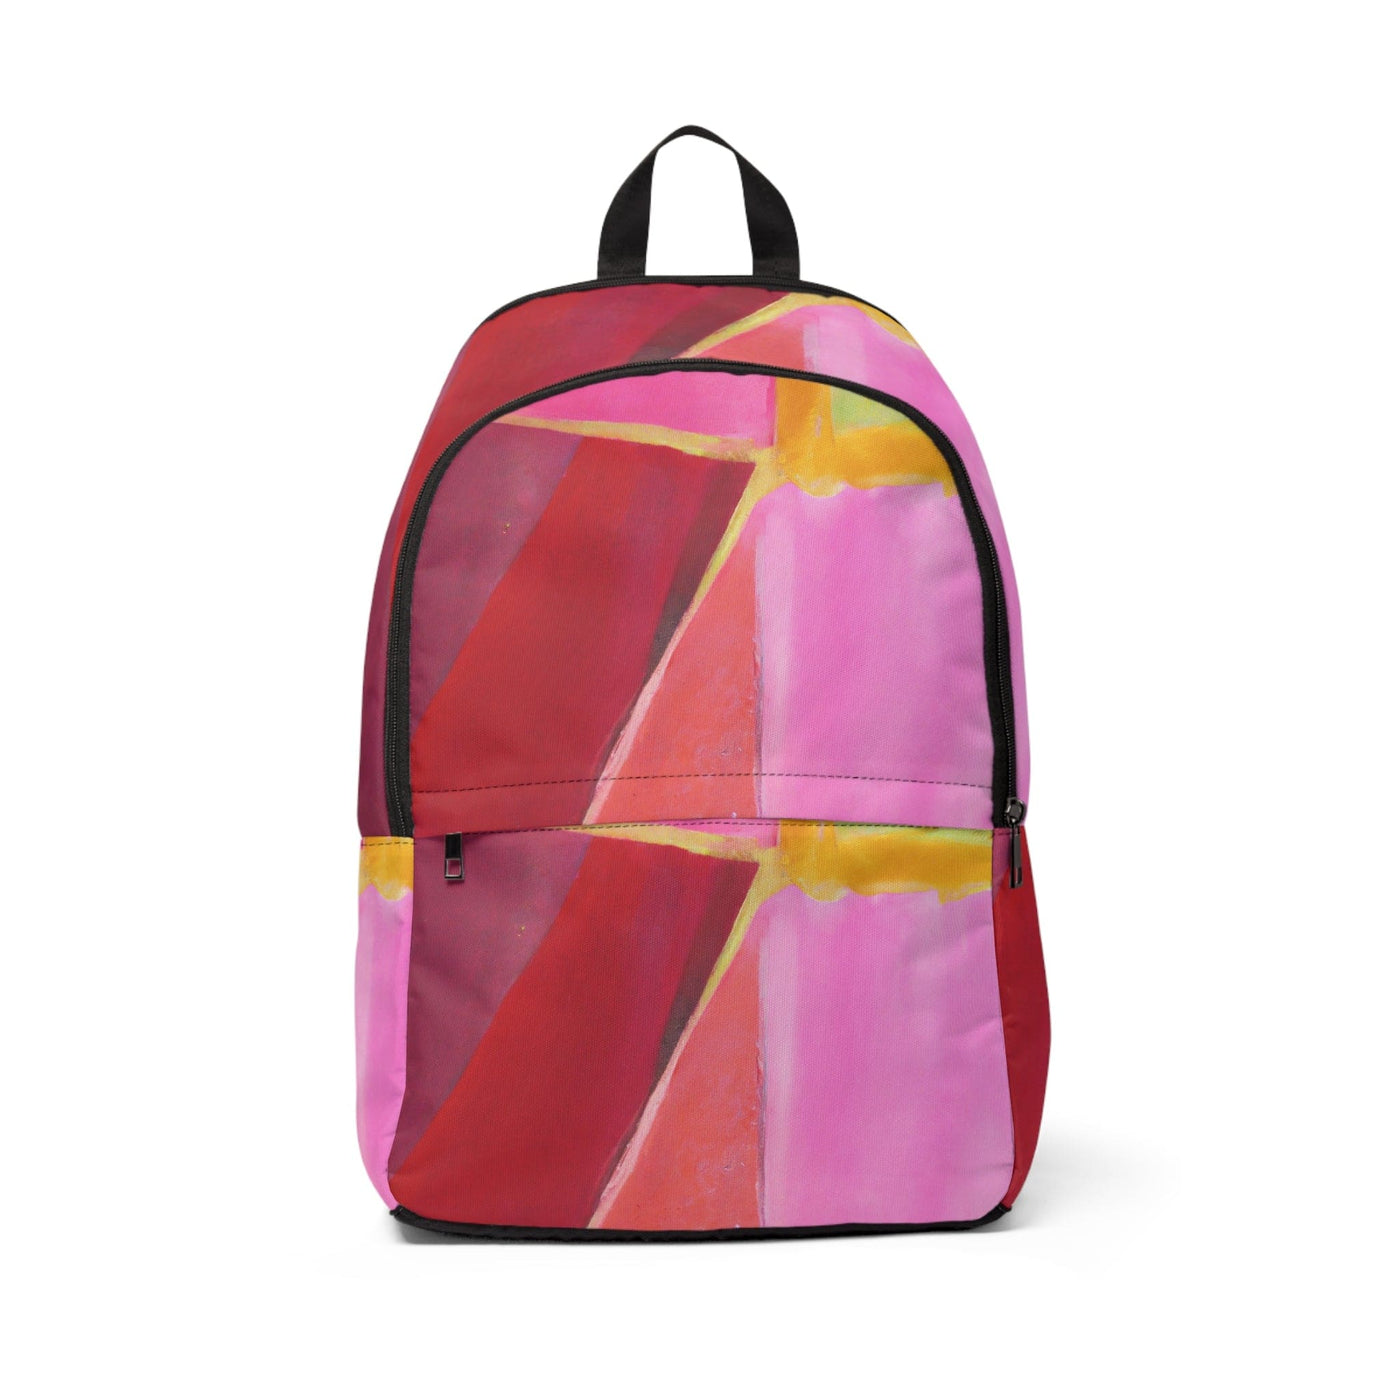 Fashion Backpack Waterproof Pink Mauve Red Geometric Pattern - Bags